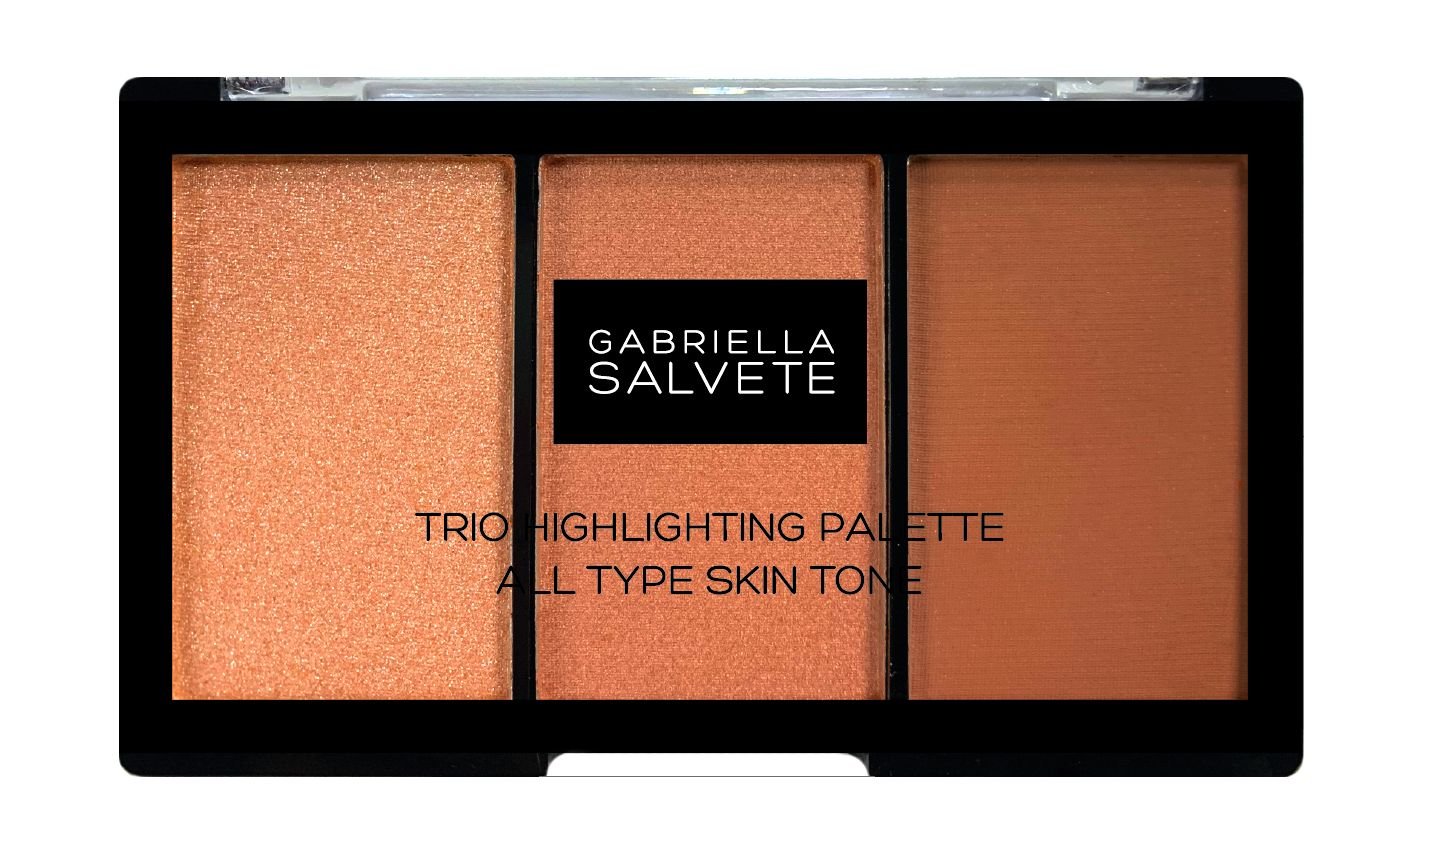 Gabriella Salvete Trio Highlighting Palette